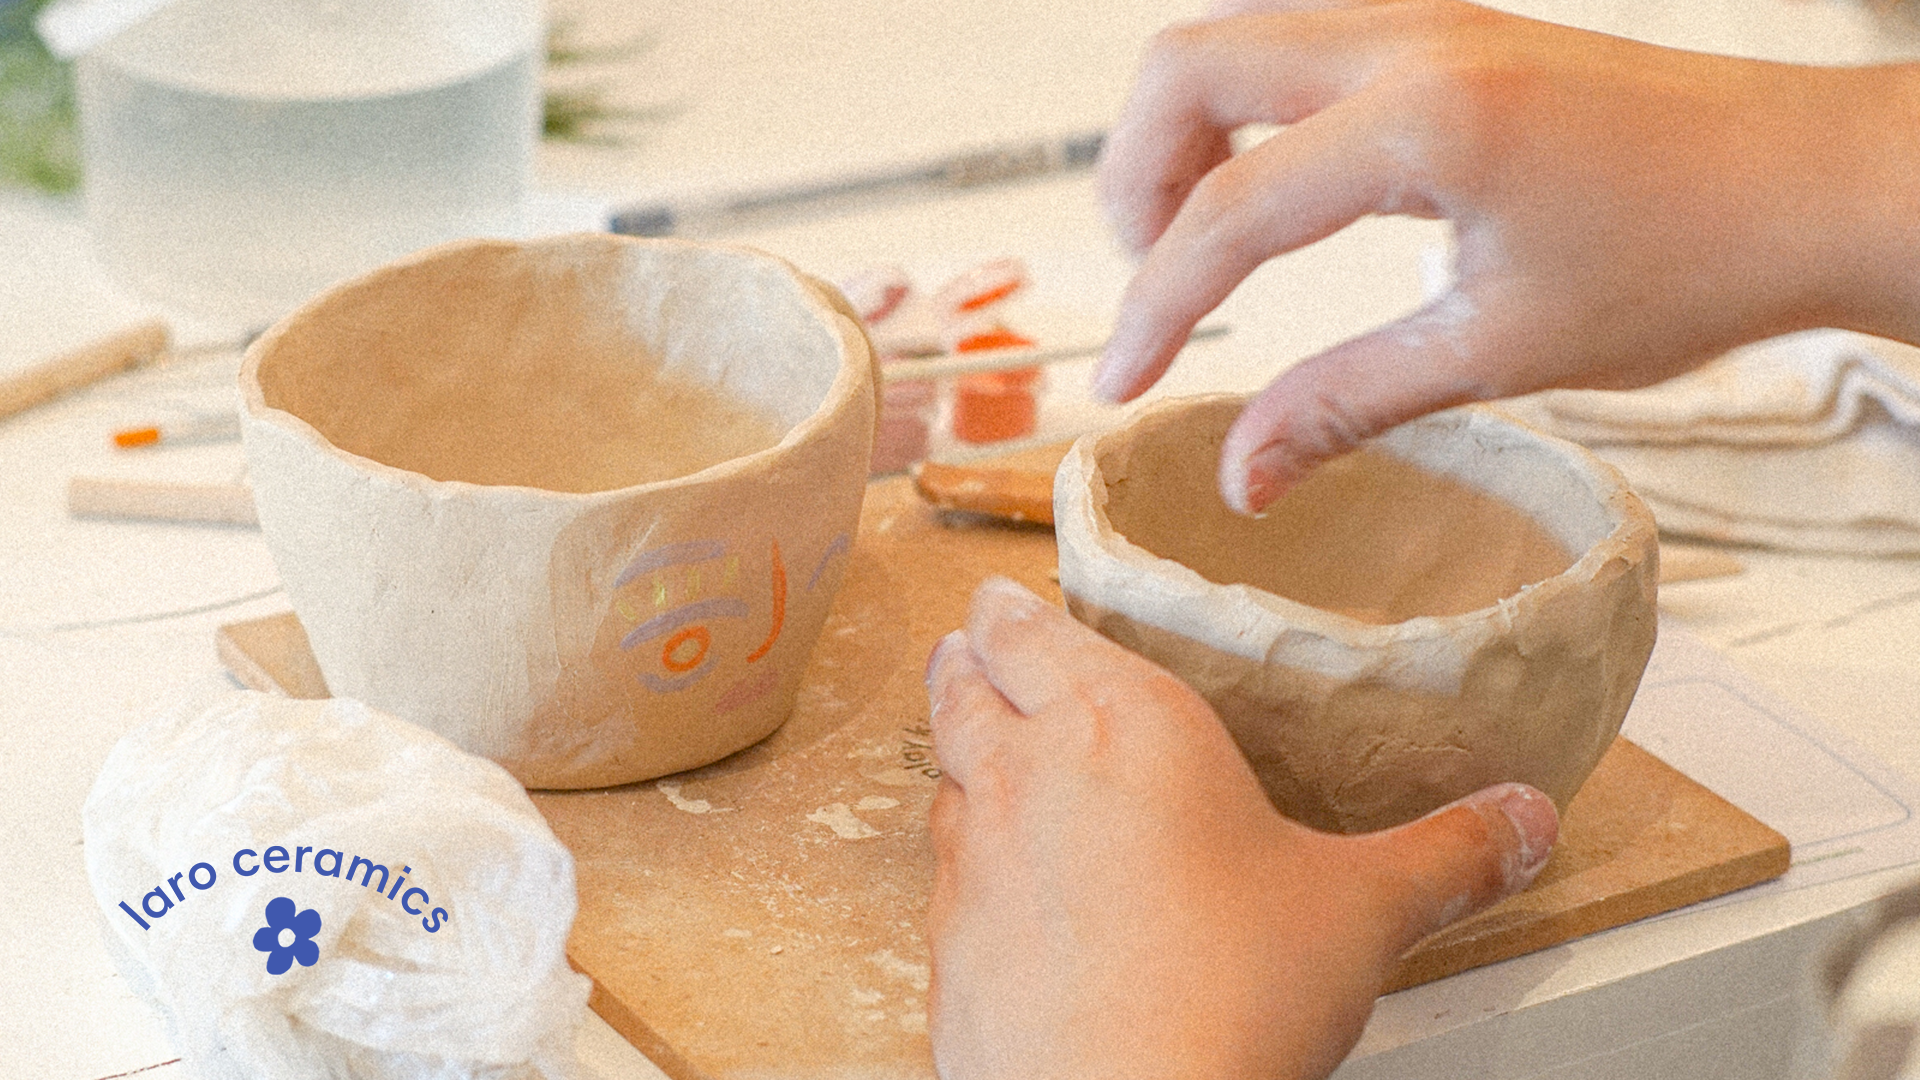 One (1) Free Laro Ceramics Mug-Making Pottery Class